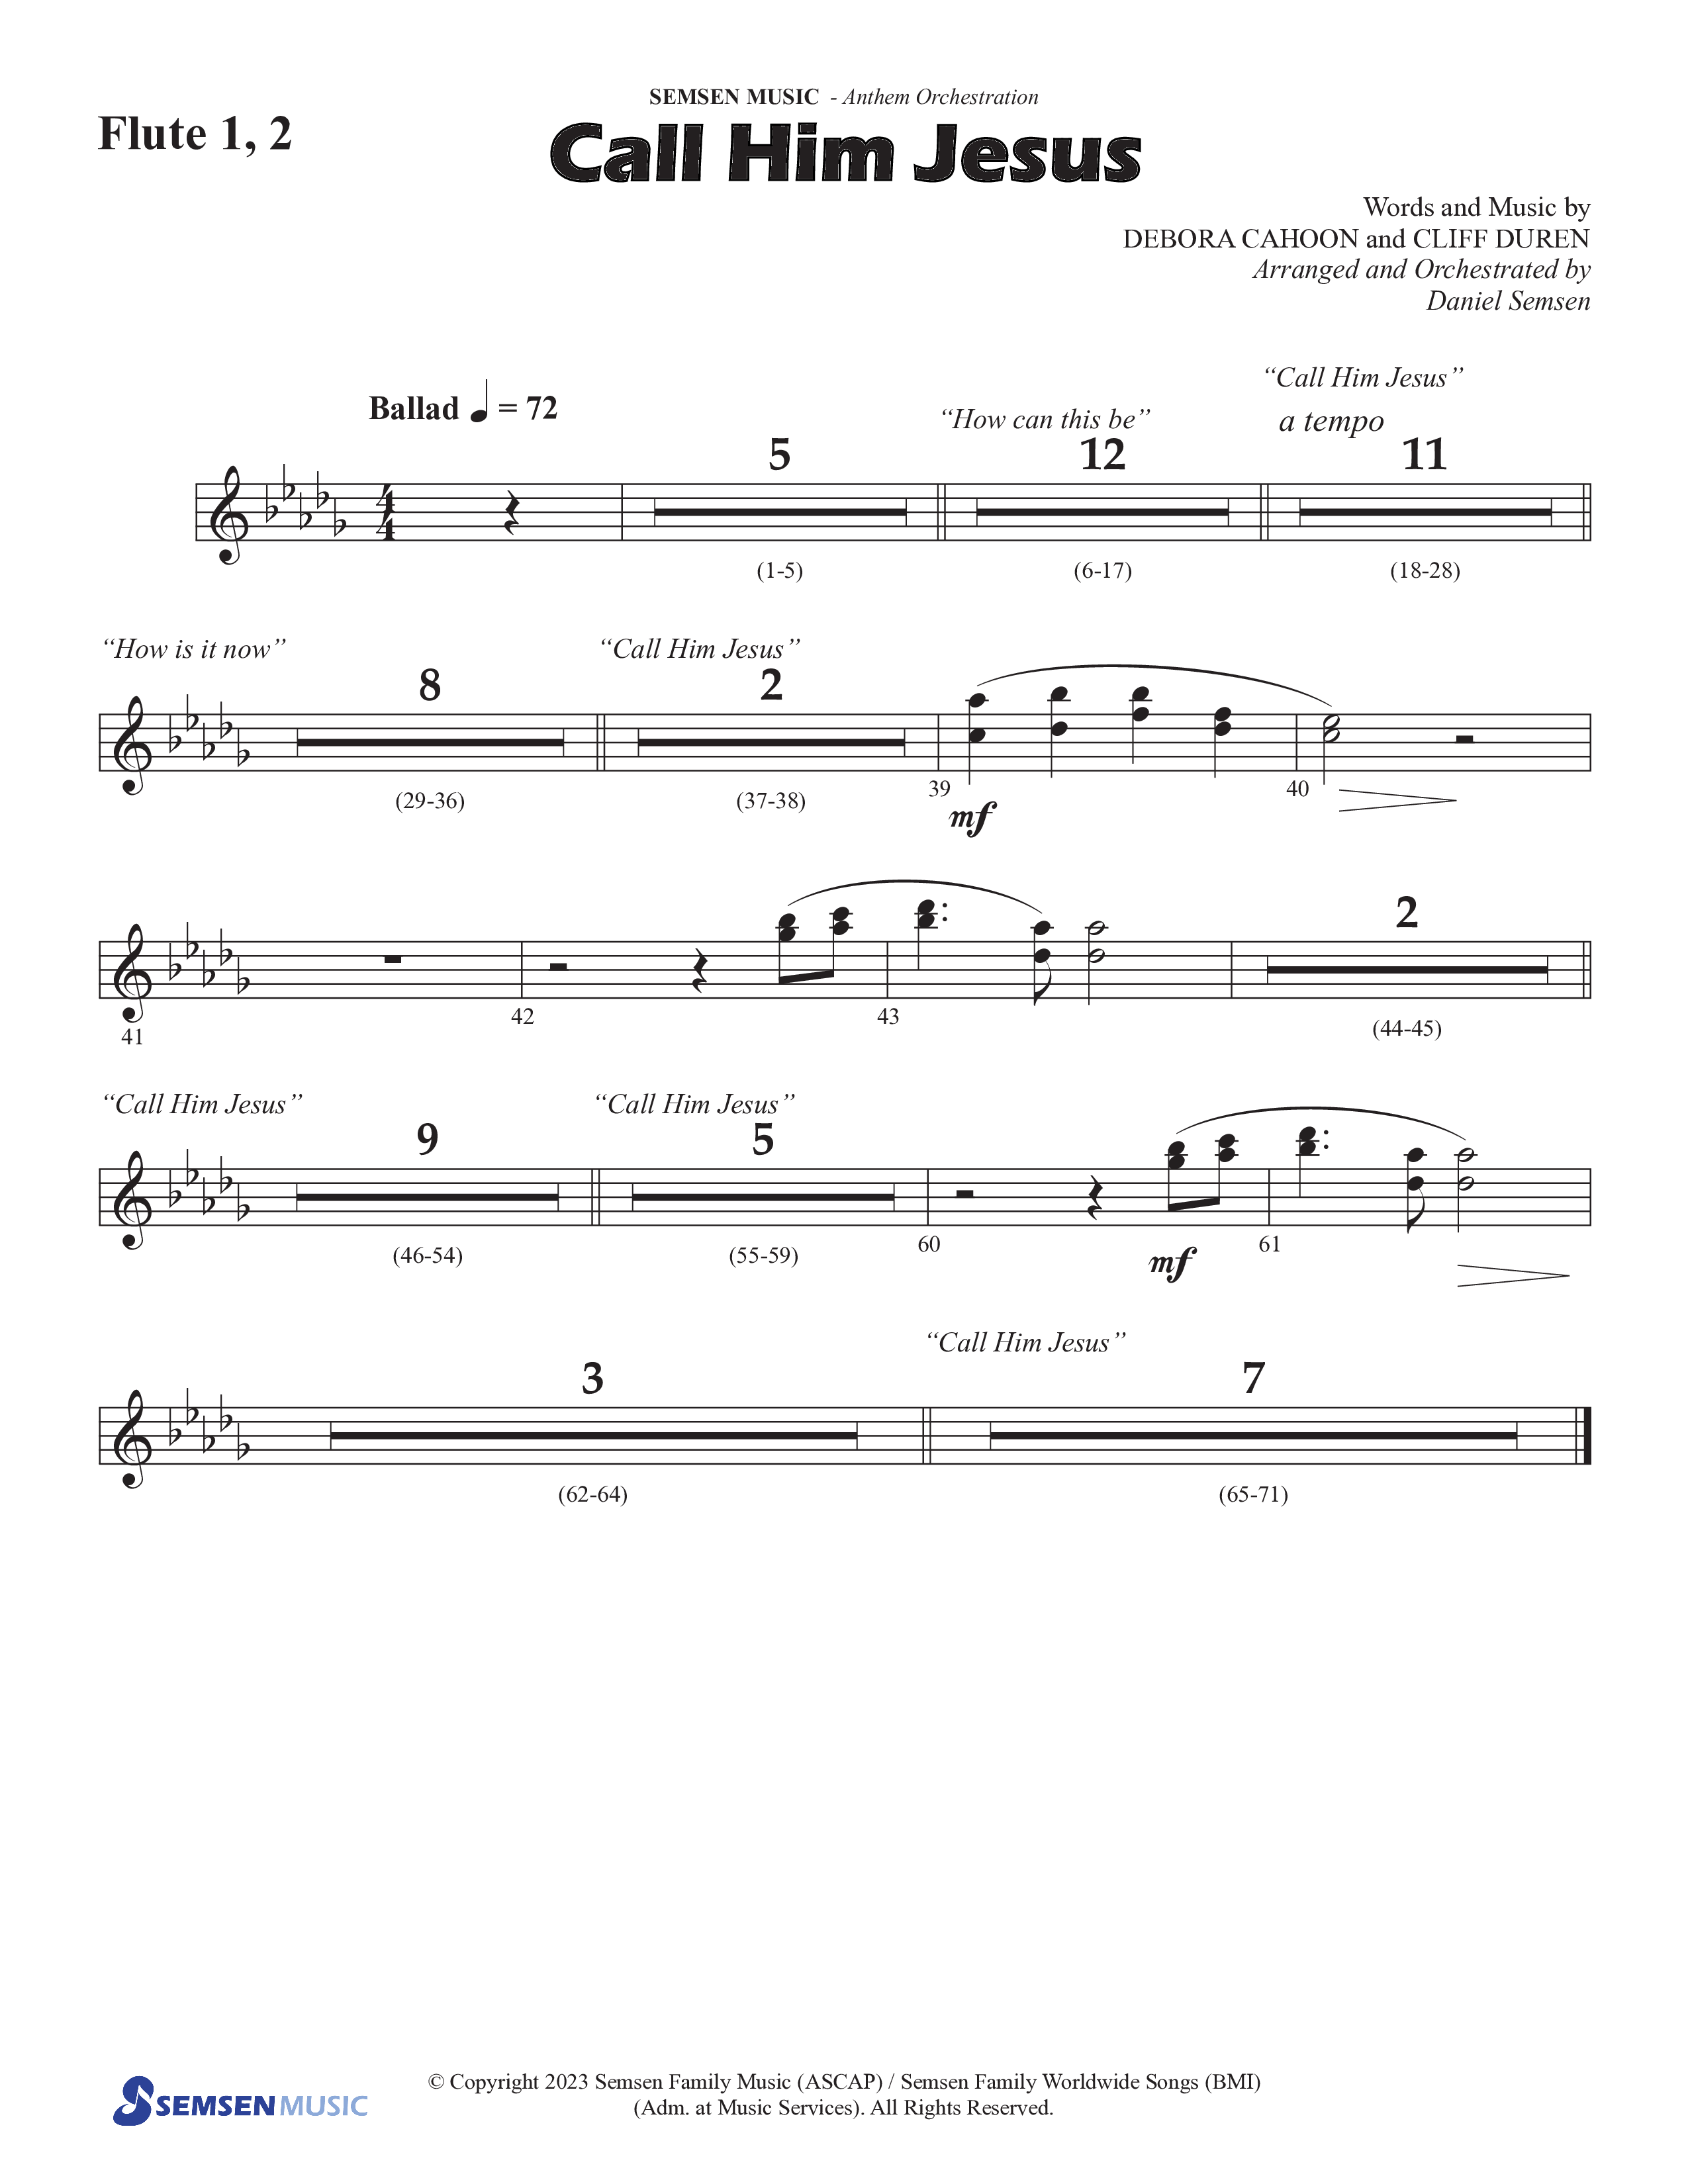 Call Him Jesus (Choral Anthem SATB) Flute 1/2 (Semsen Music / Arr. Daniel Semsen)